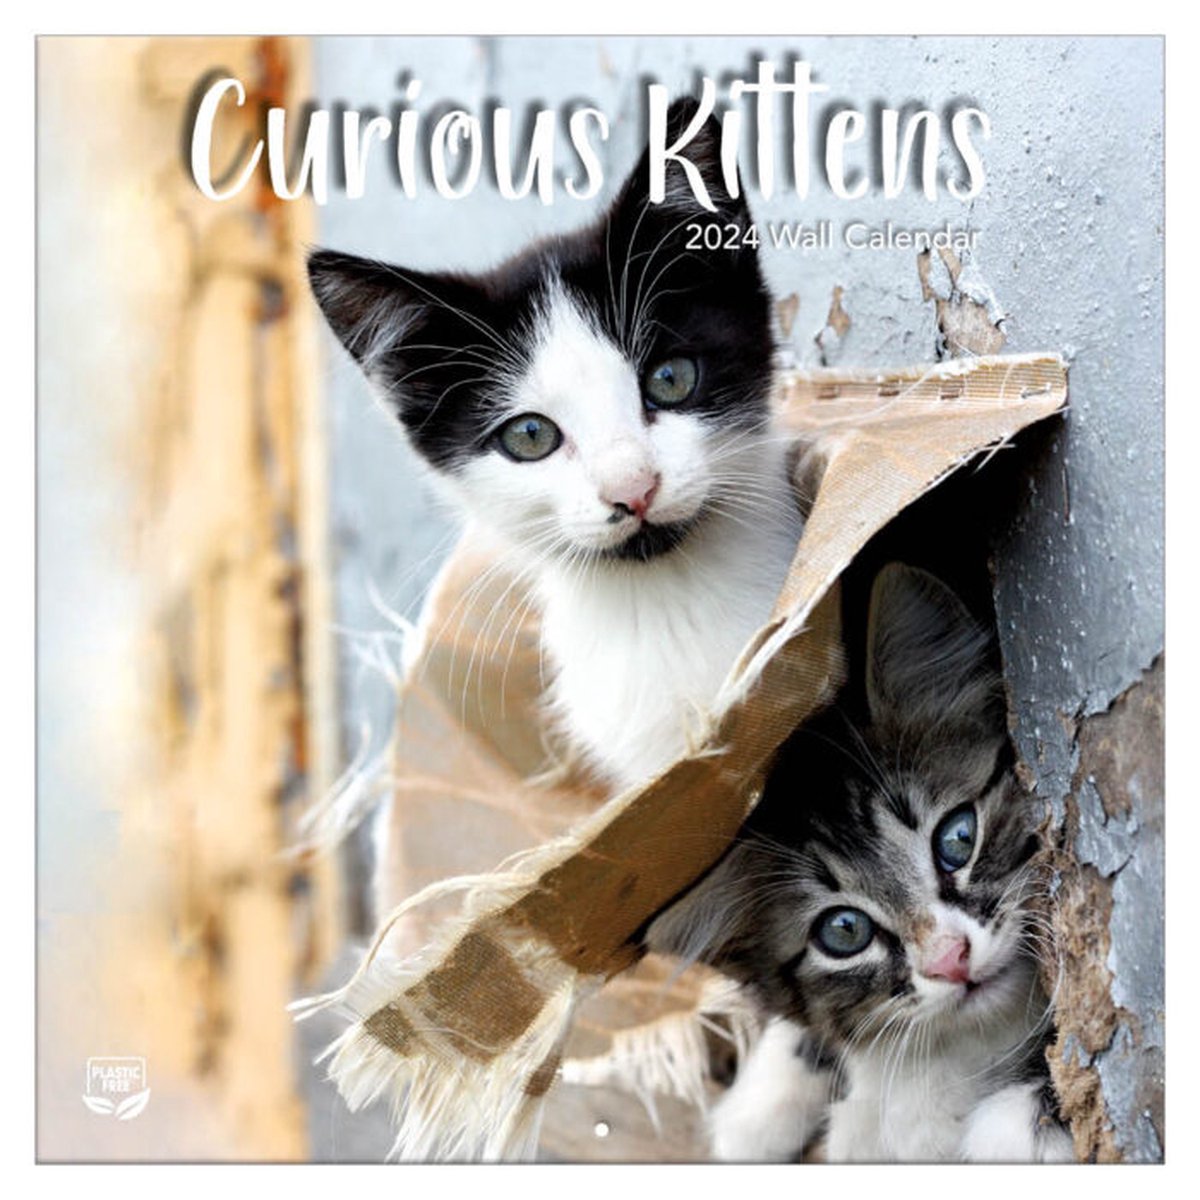 Curious Kittens Kalender 2024 TL Turner